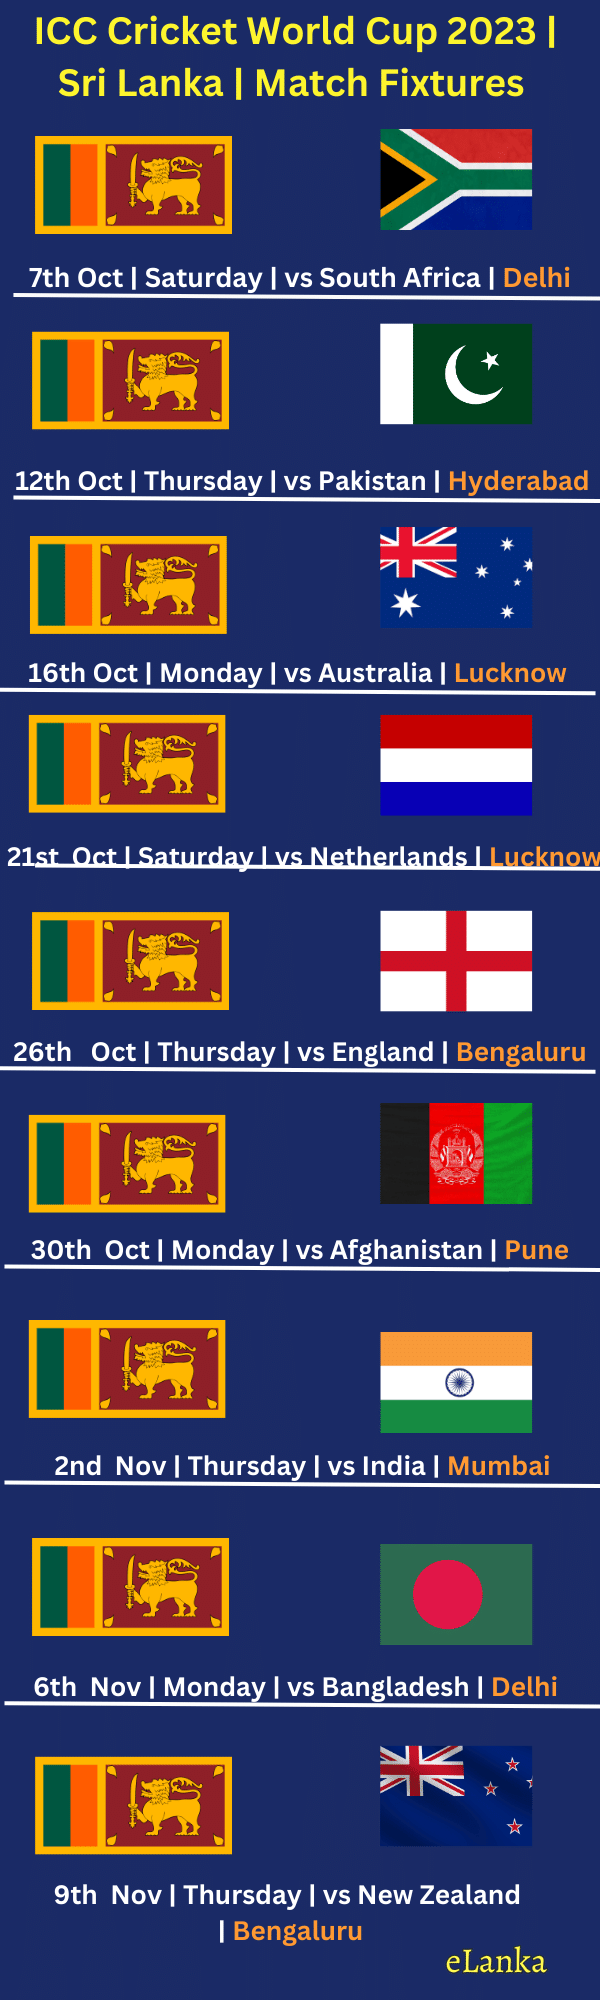 Icc Cricket World Cup 2023 Sri Lanka Match Fixtures - elanka 